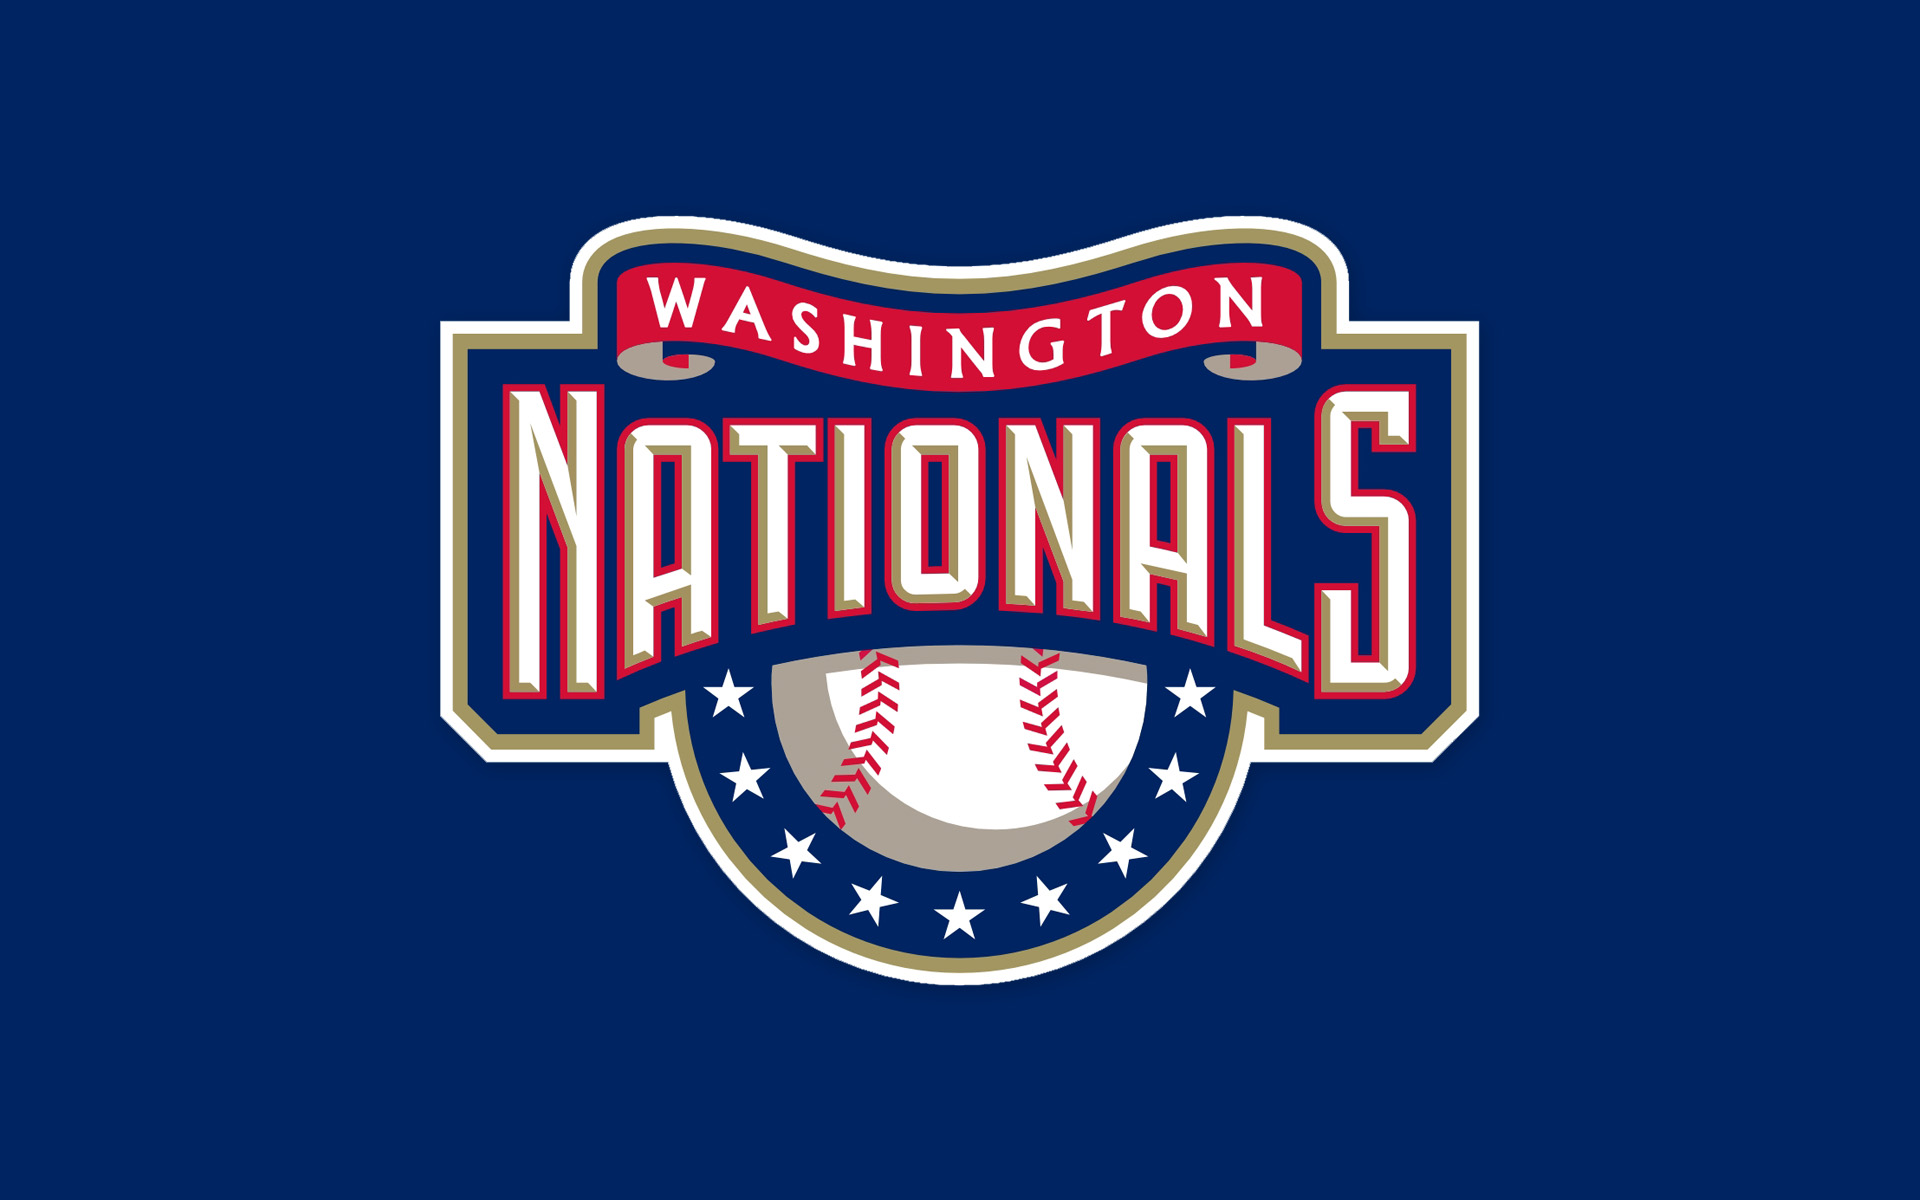 Washington Nationals Mlb Baseball 9 Wallpapers Hd Desktop And Mobile Backgrounds